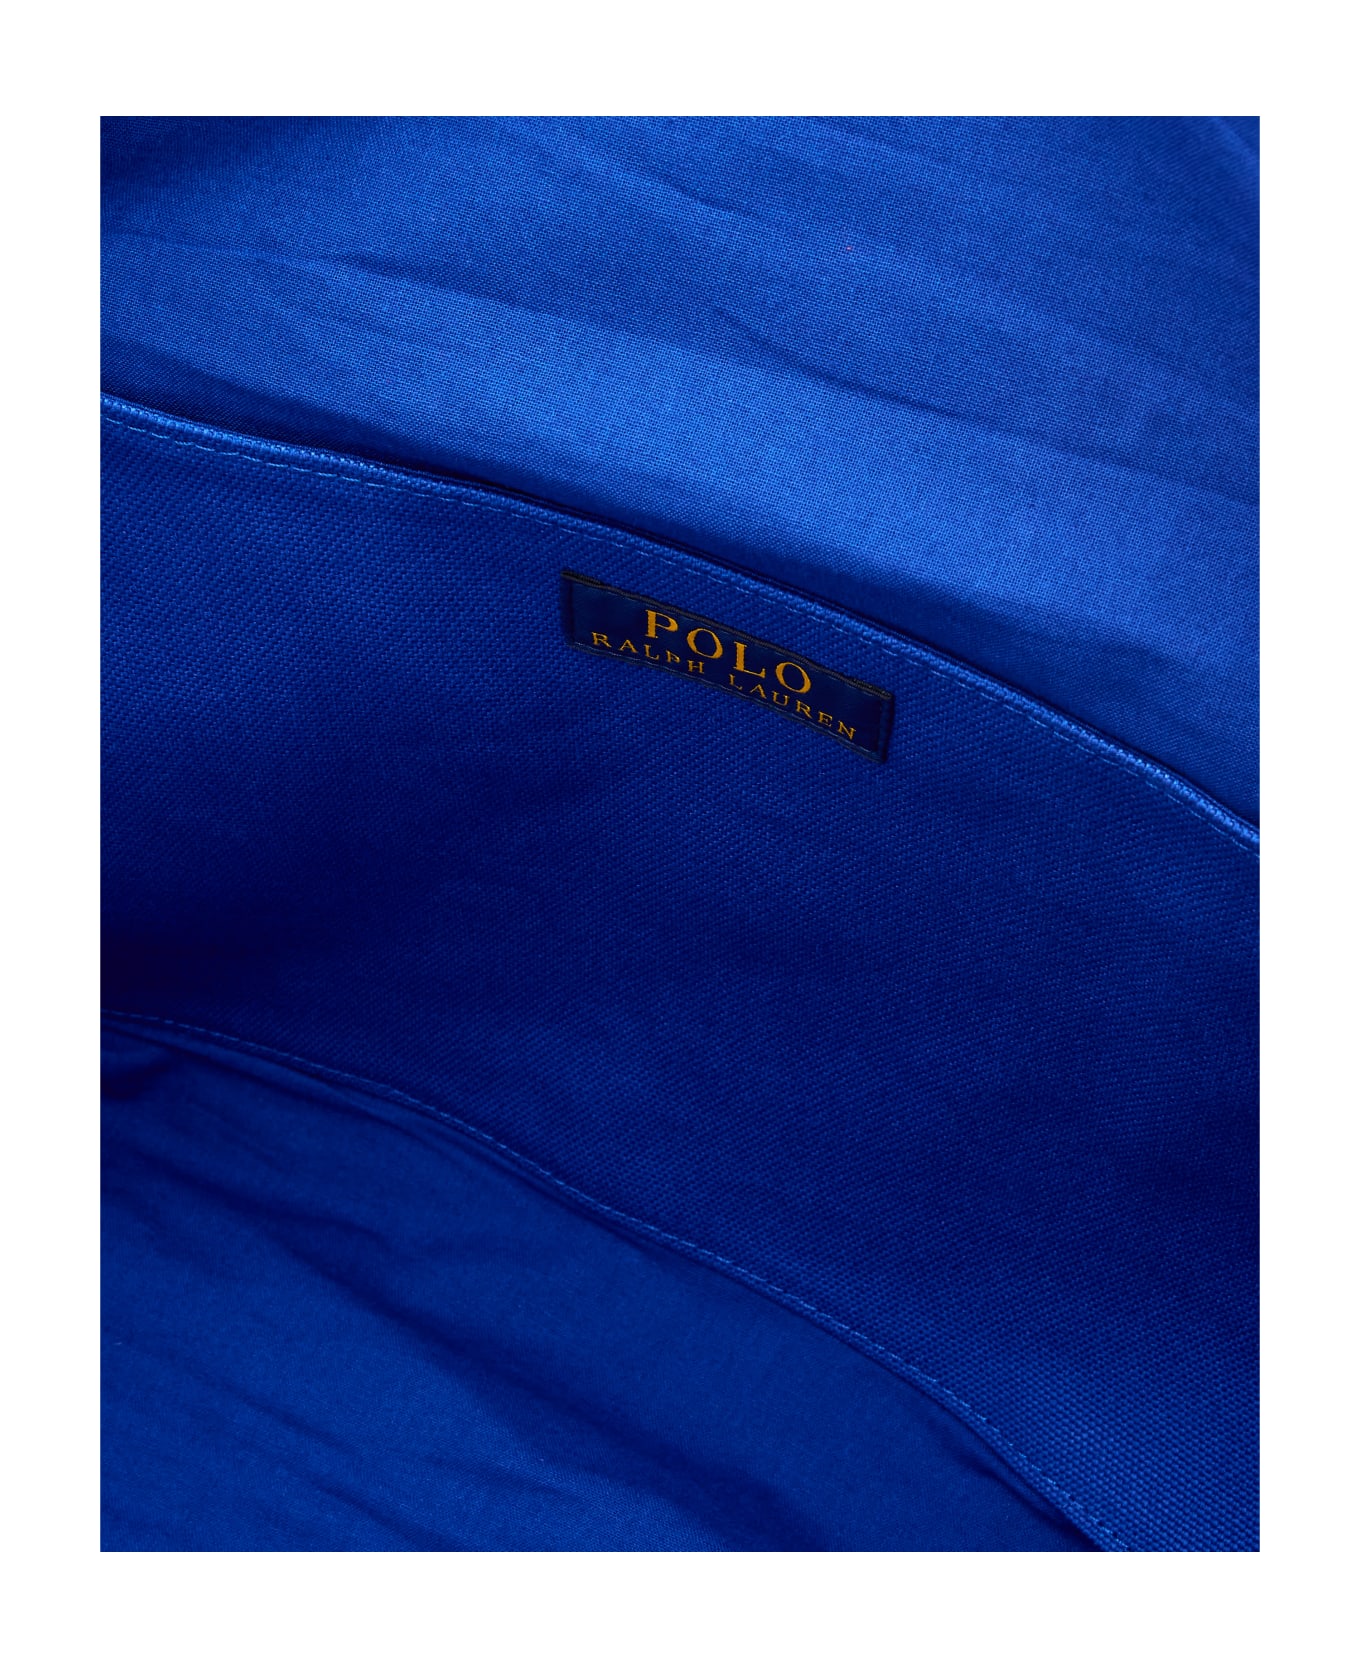 Polo Ralph Lauren Duffle Large Travel Bag - Blue